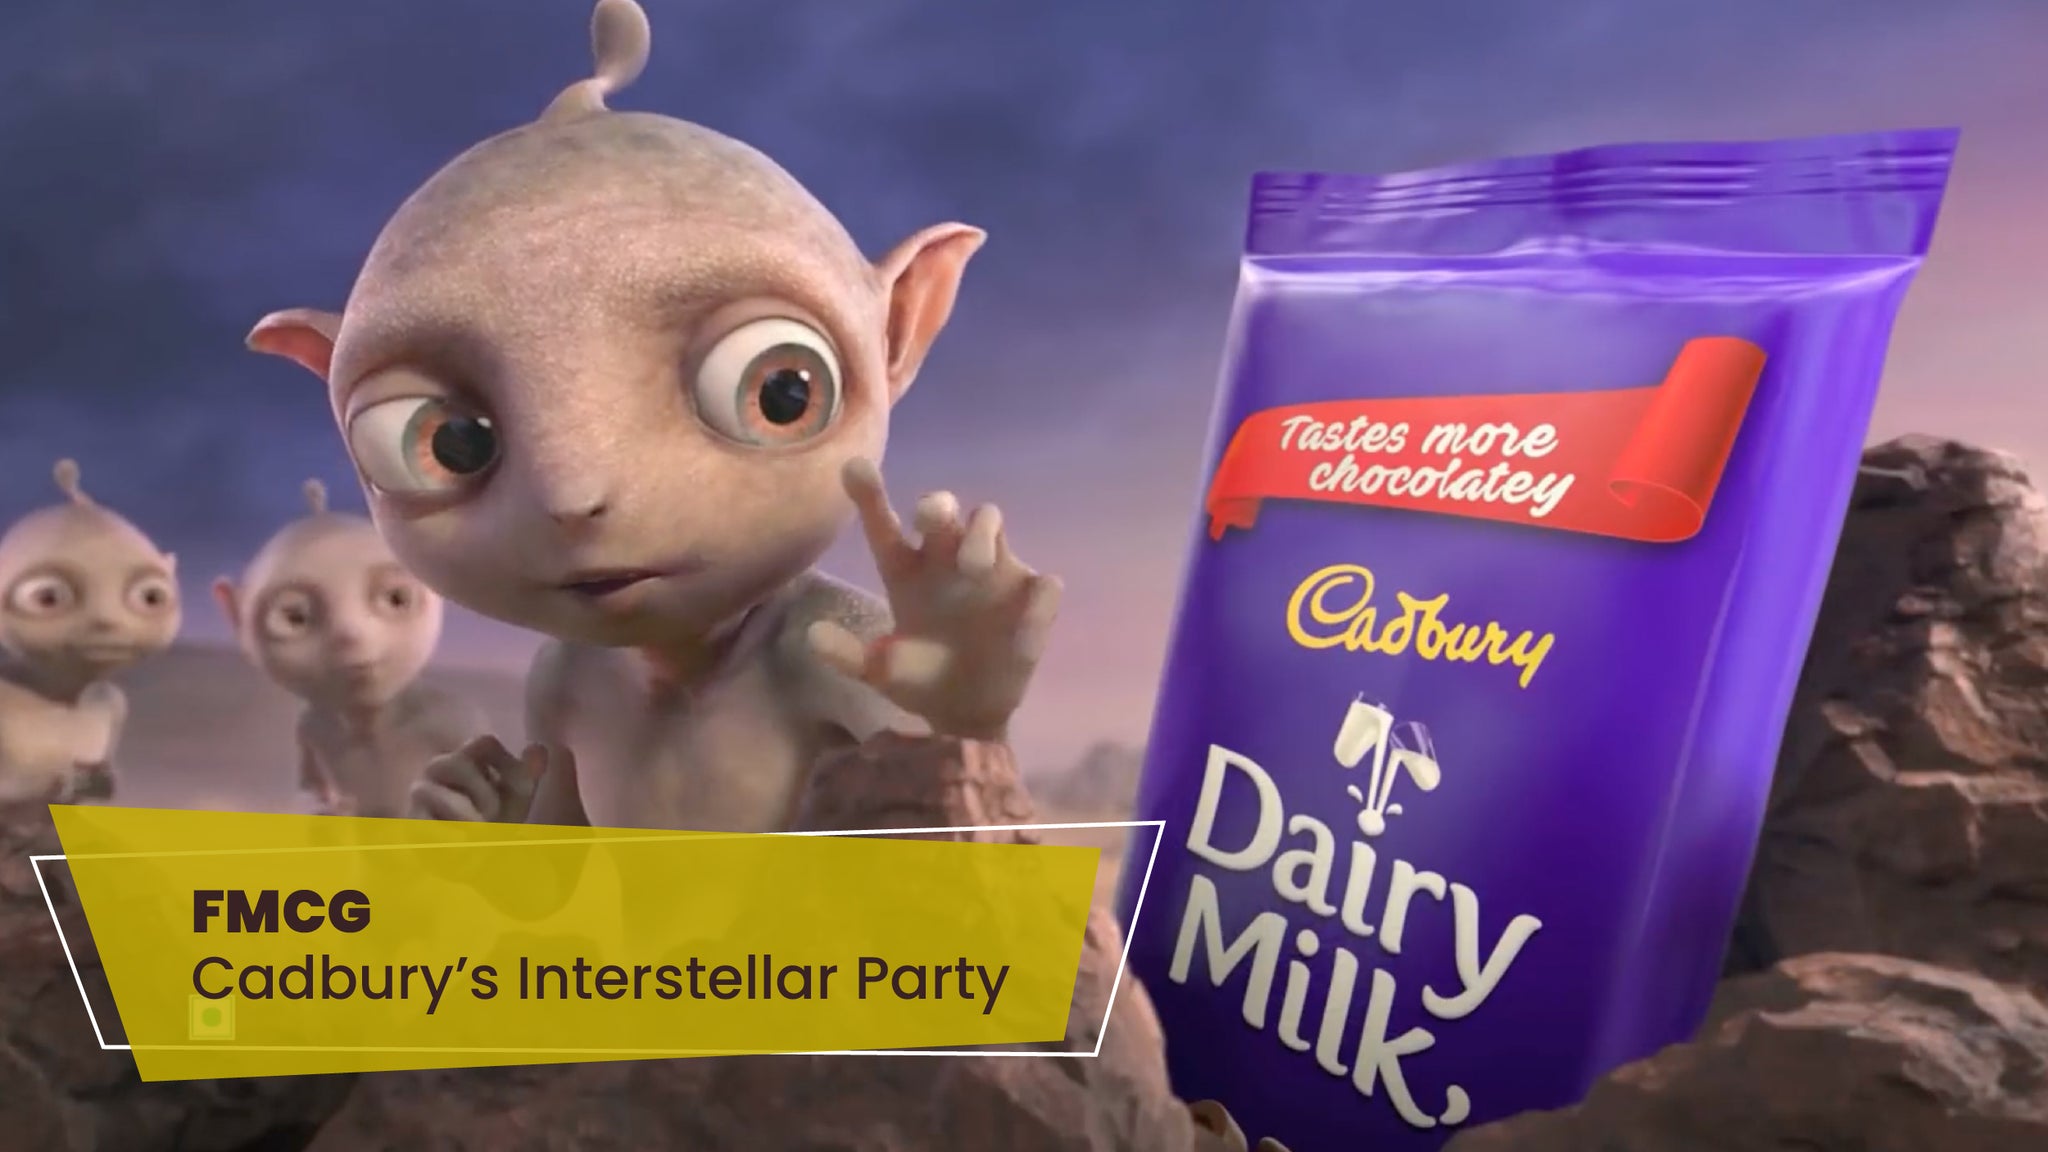 Cadbury’s Interstellar Party